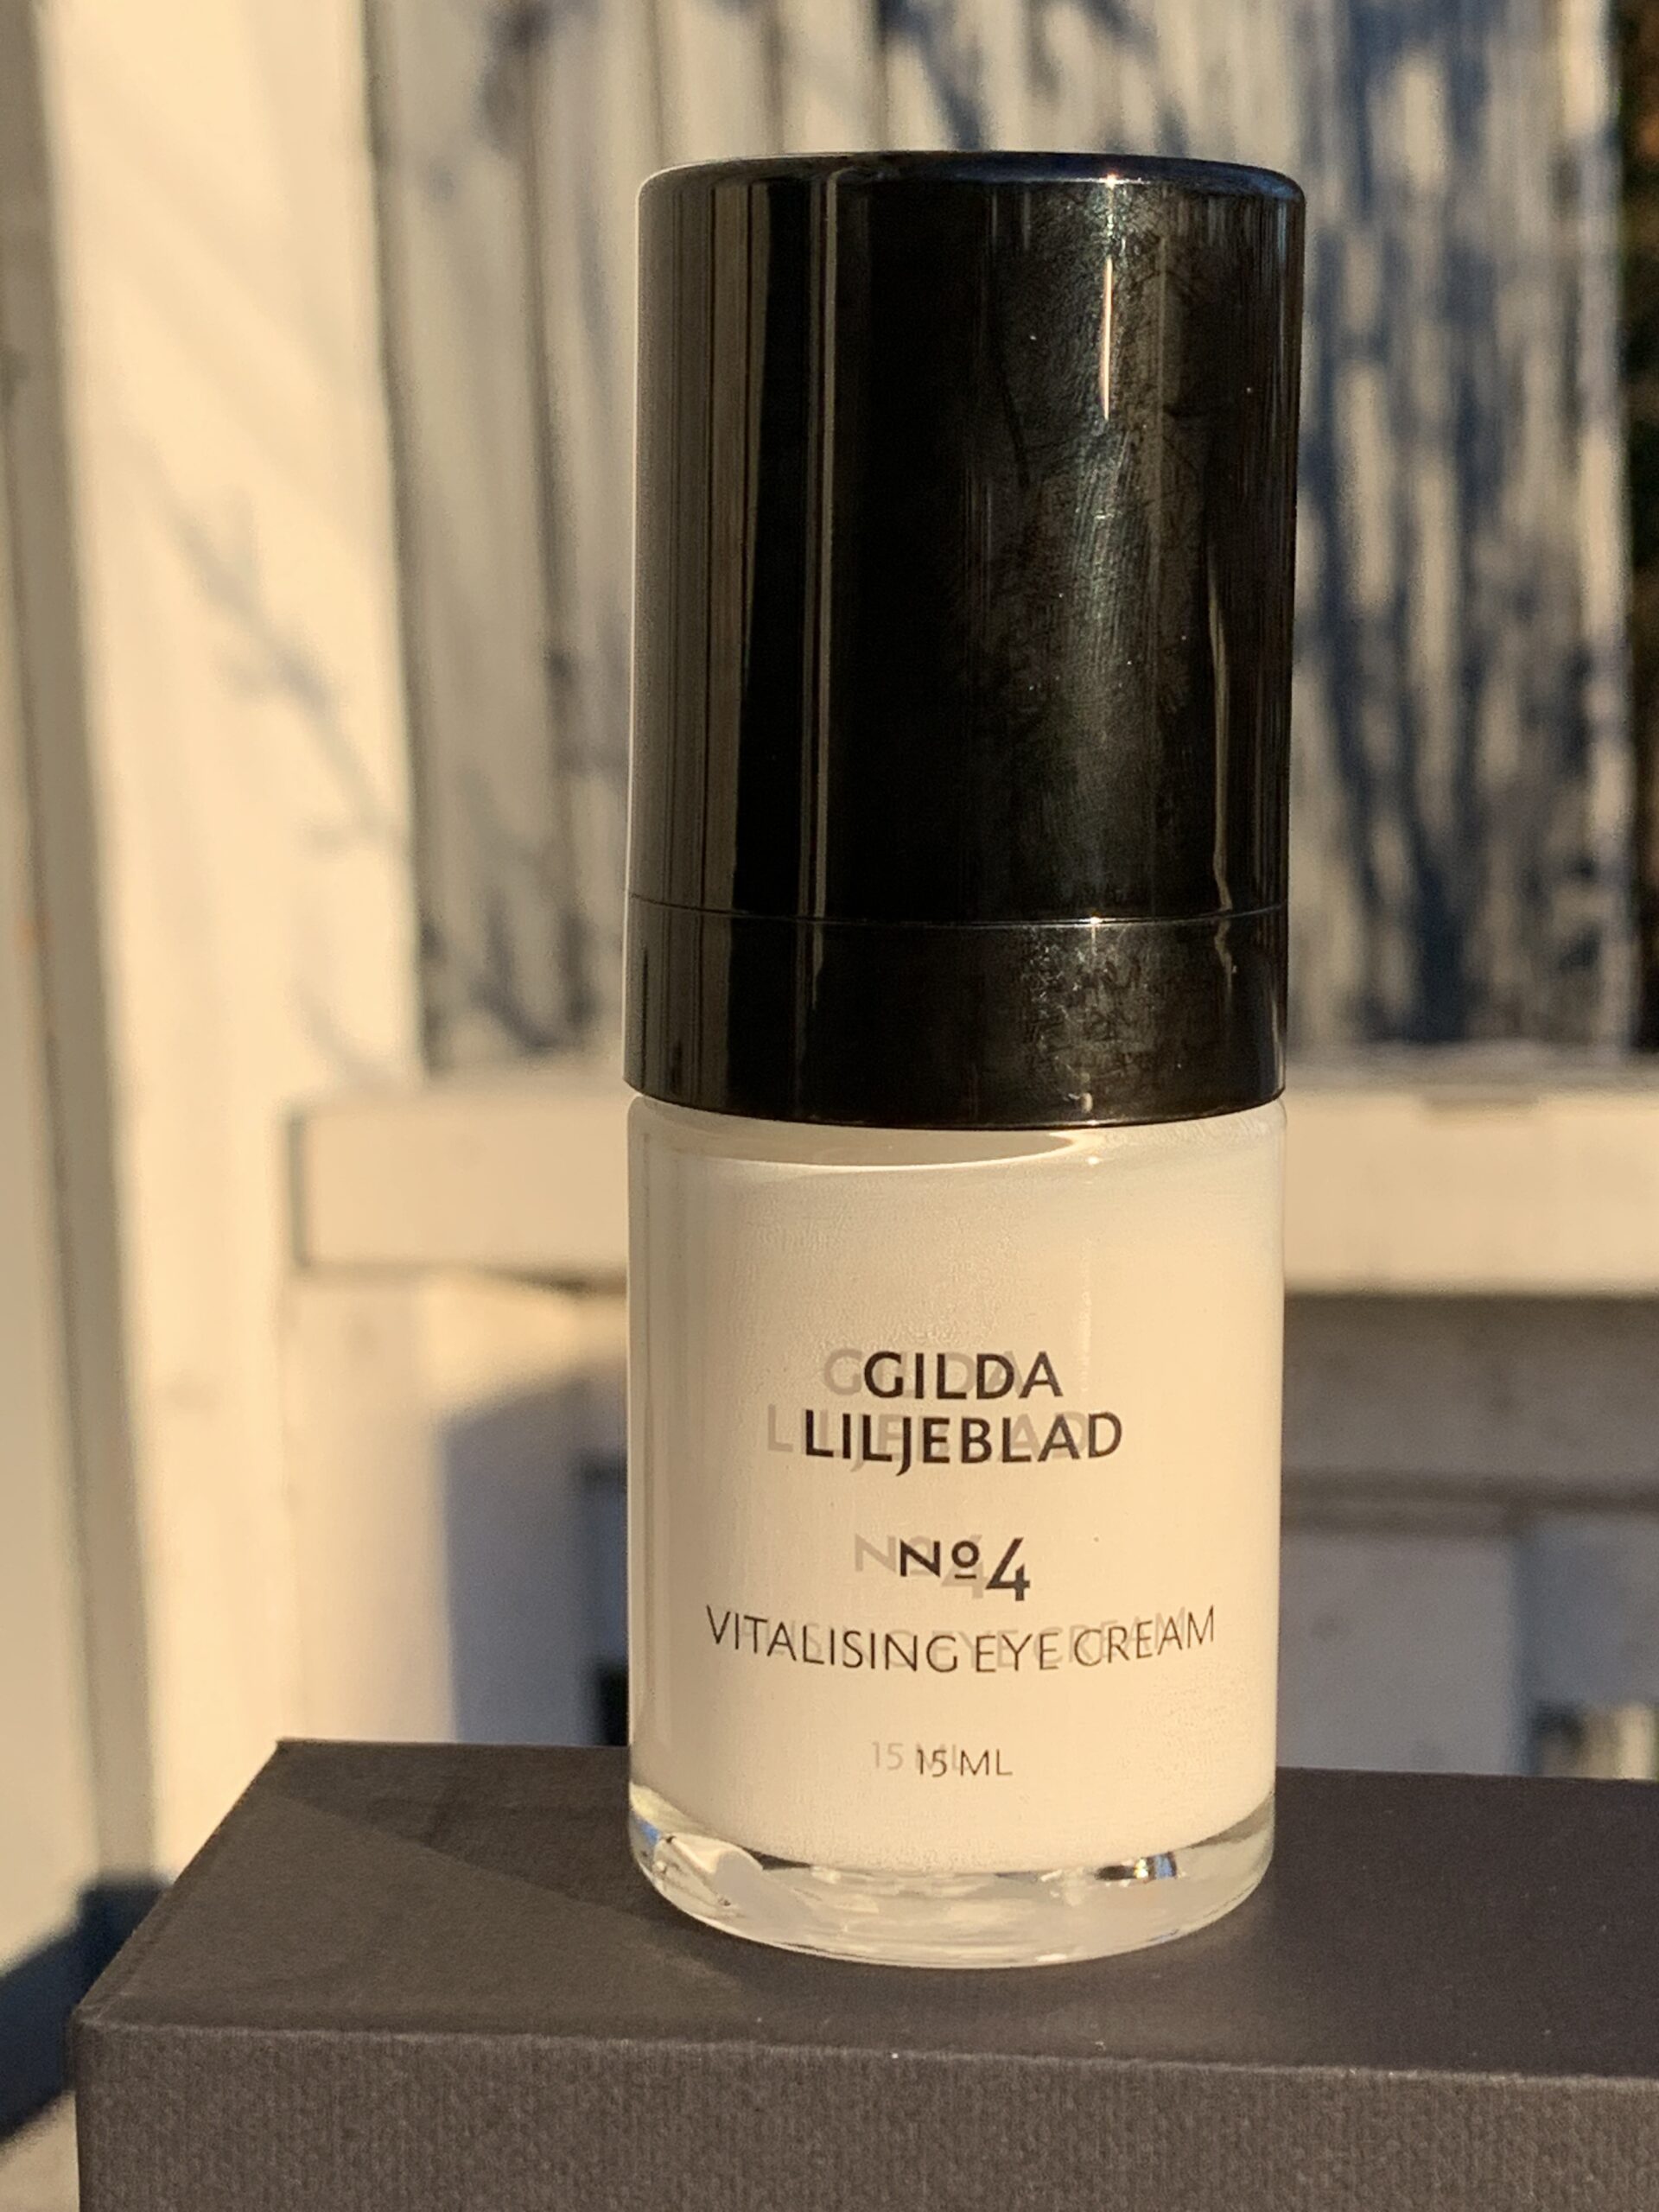 Gilda vitalising eye cream